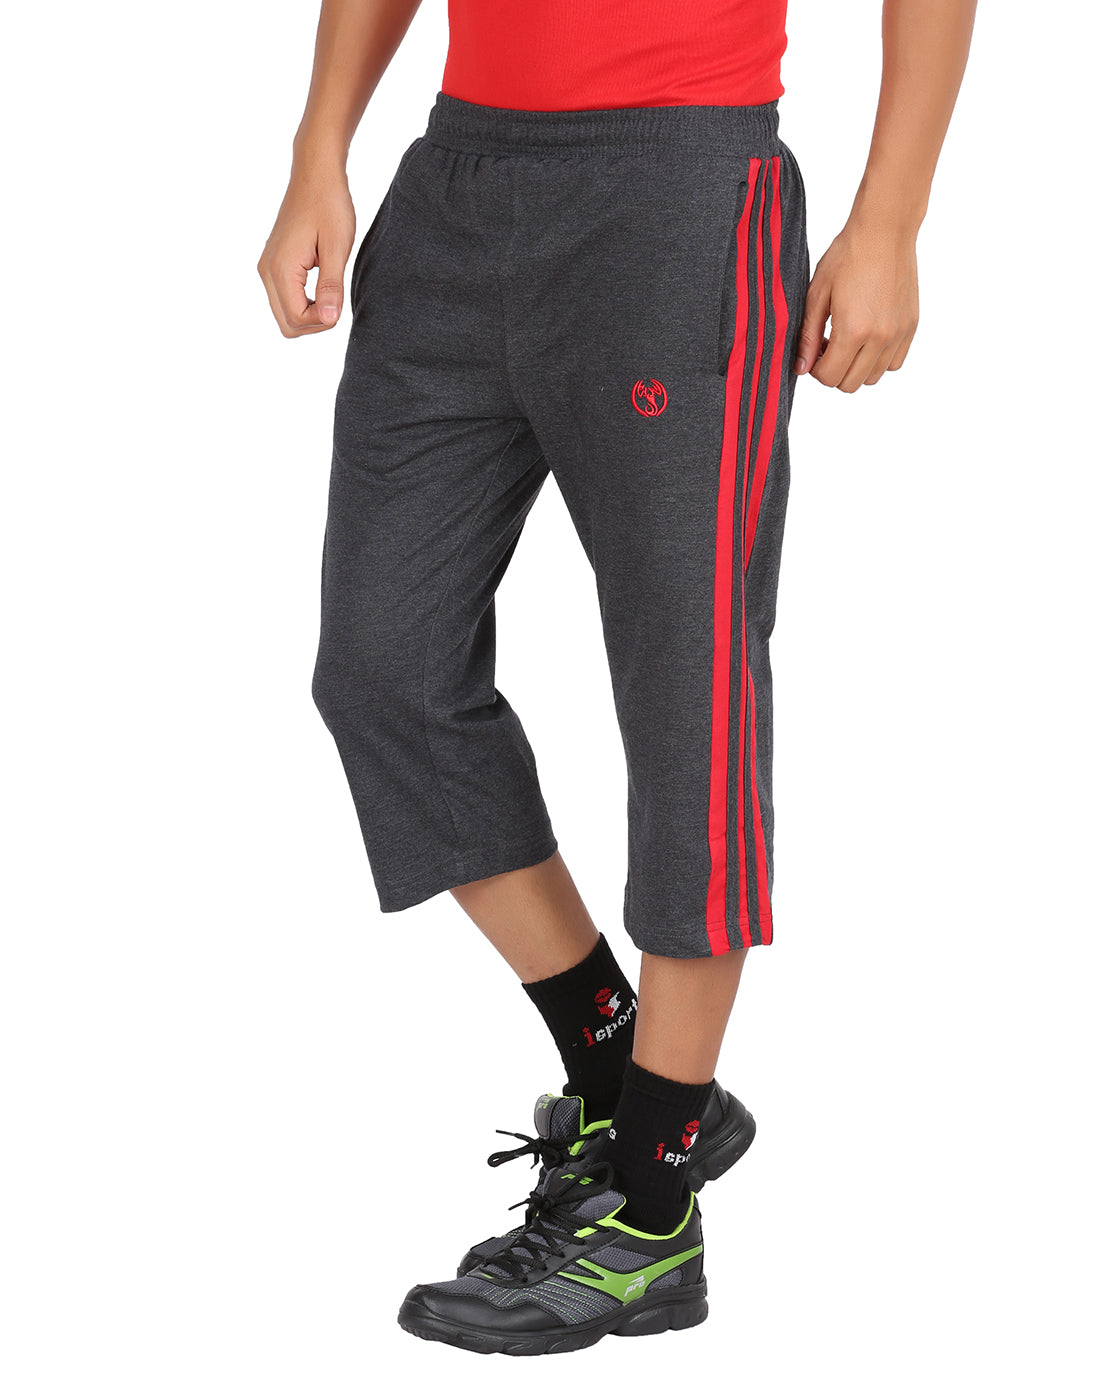 Buy Grey Track Pants for Men by Buda Jeans Co Online  Ajiocom